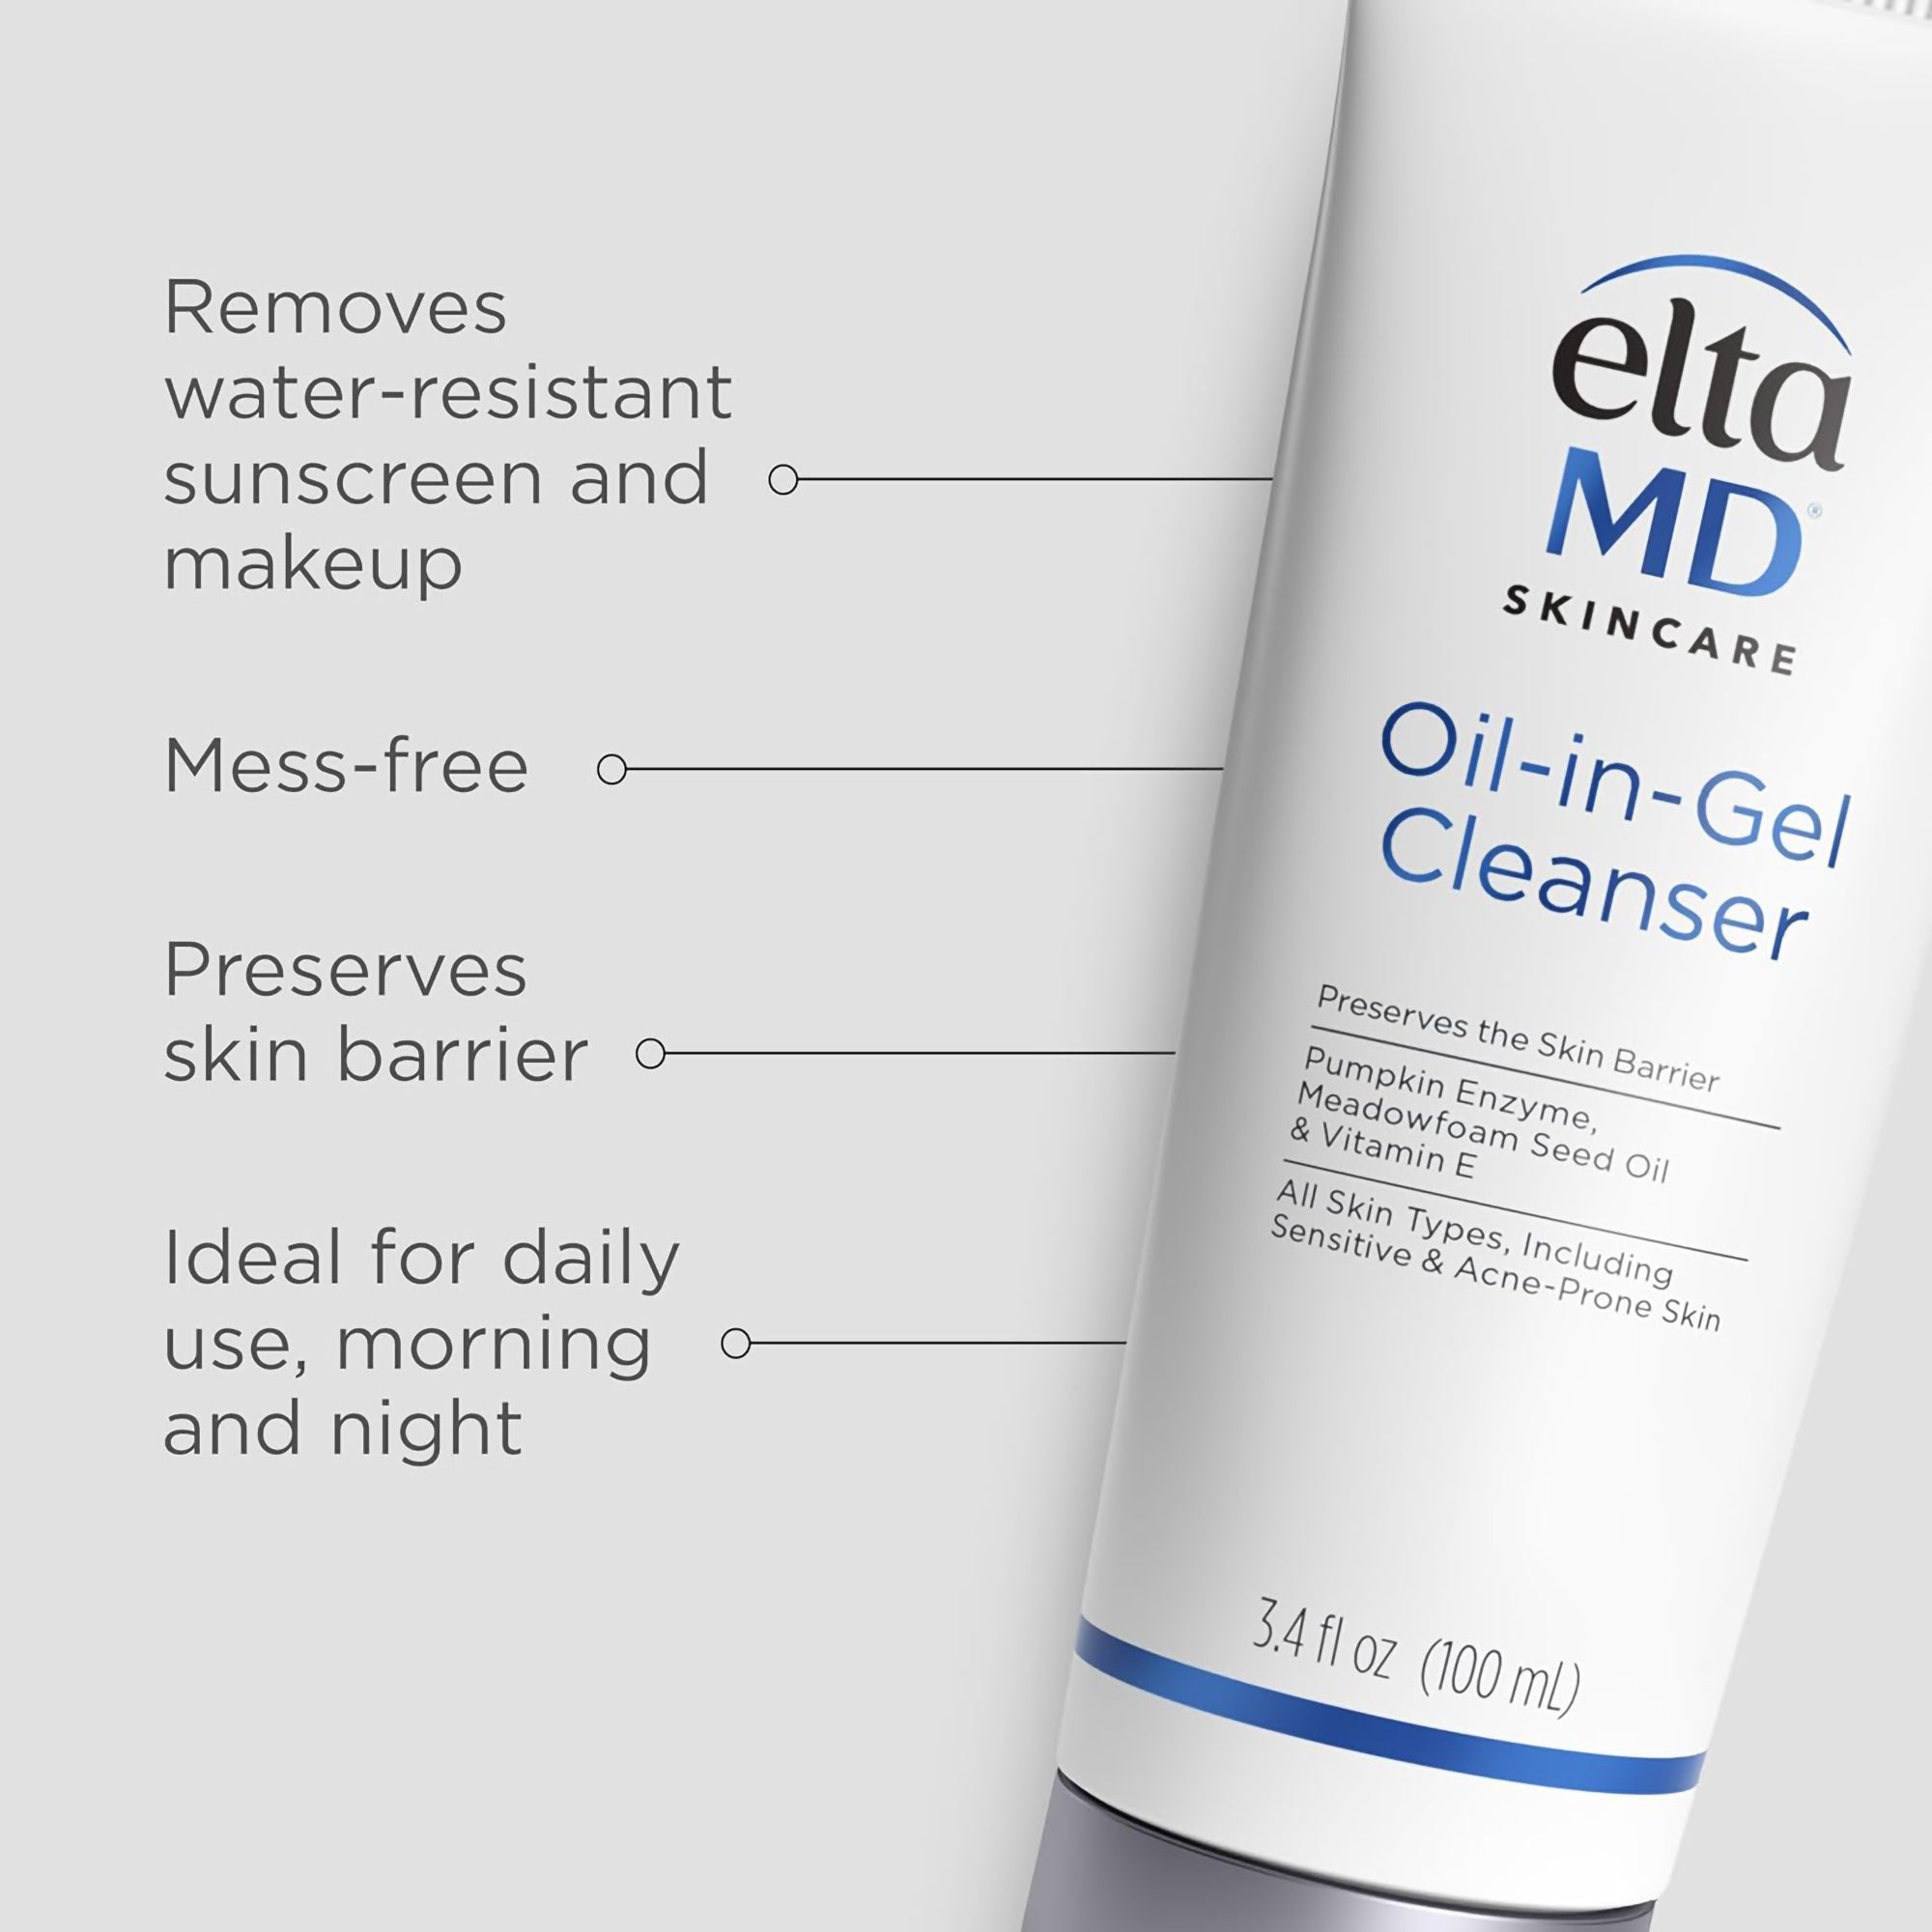 Elta MD Oil-In-Gel Cleanser / 3.4 oz